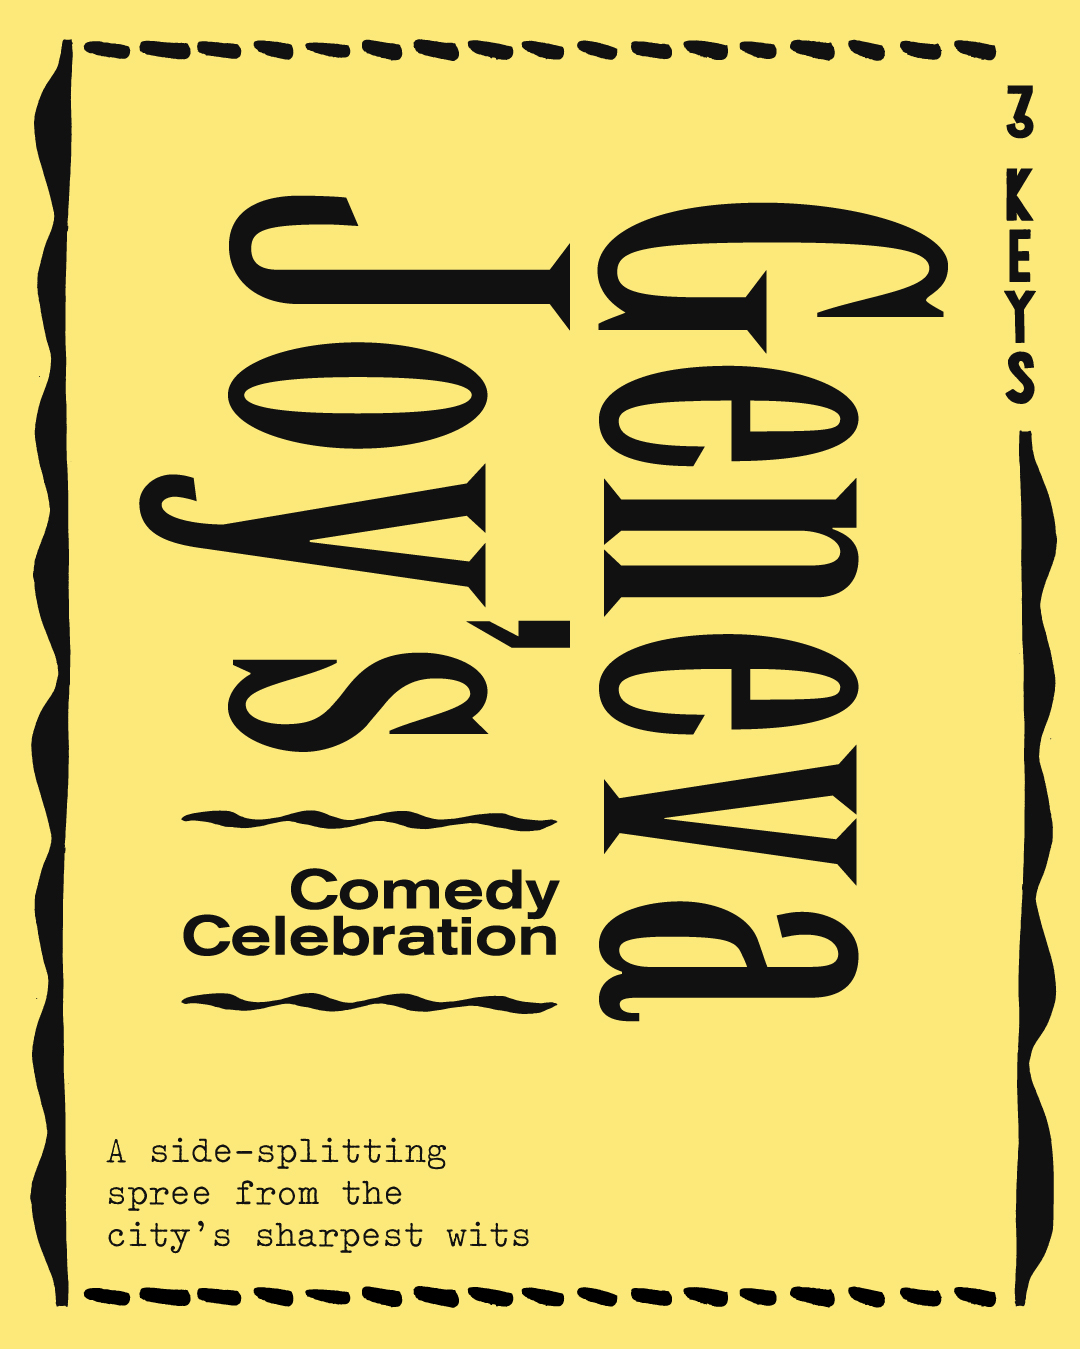 geneva joy's comedy celebration poster